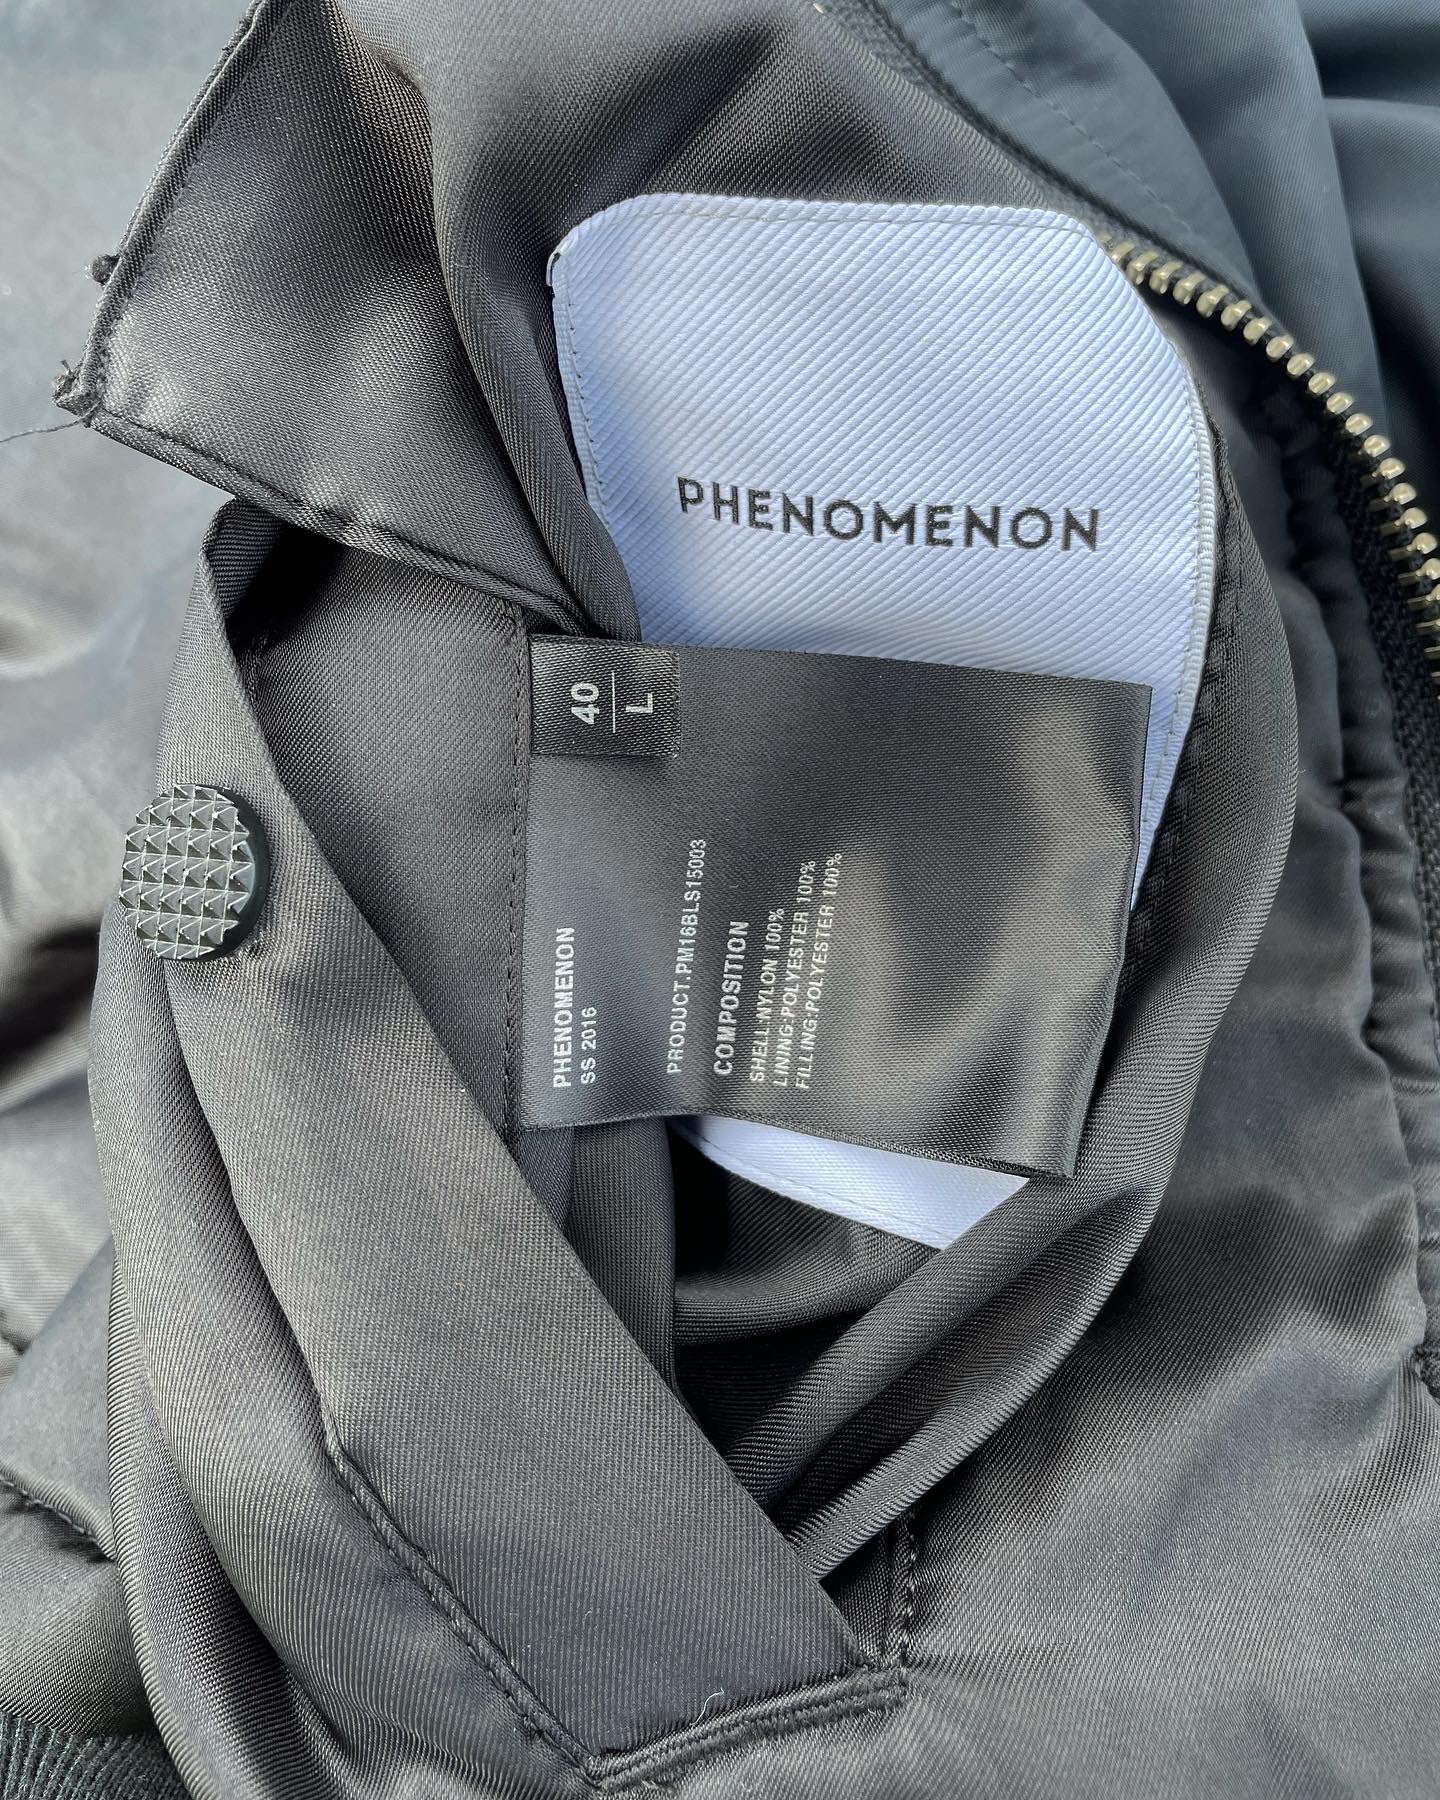 McM x PheNoMeNoN Army Bundle Ss “2011” Jacket Shirt And Bag